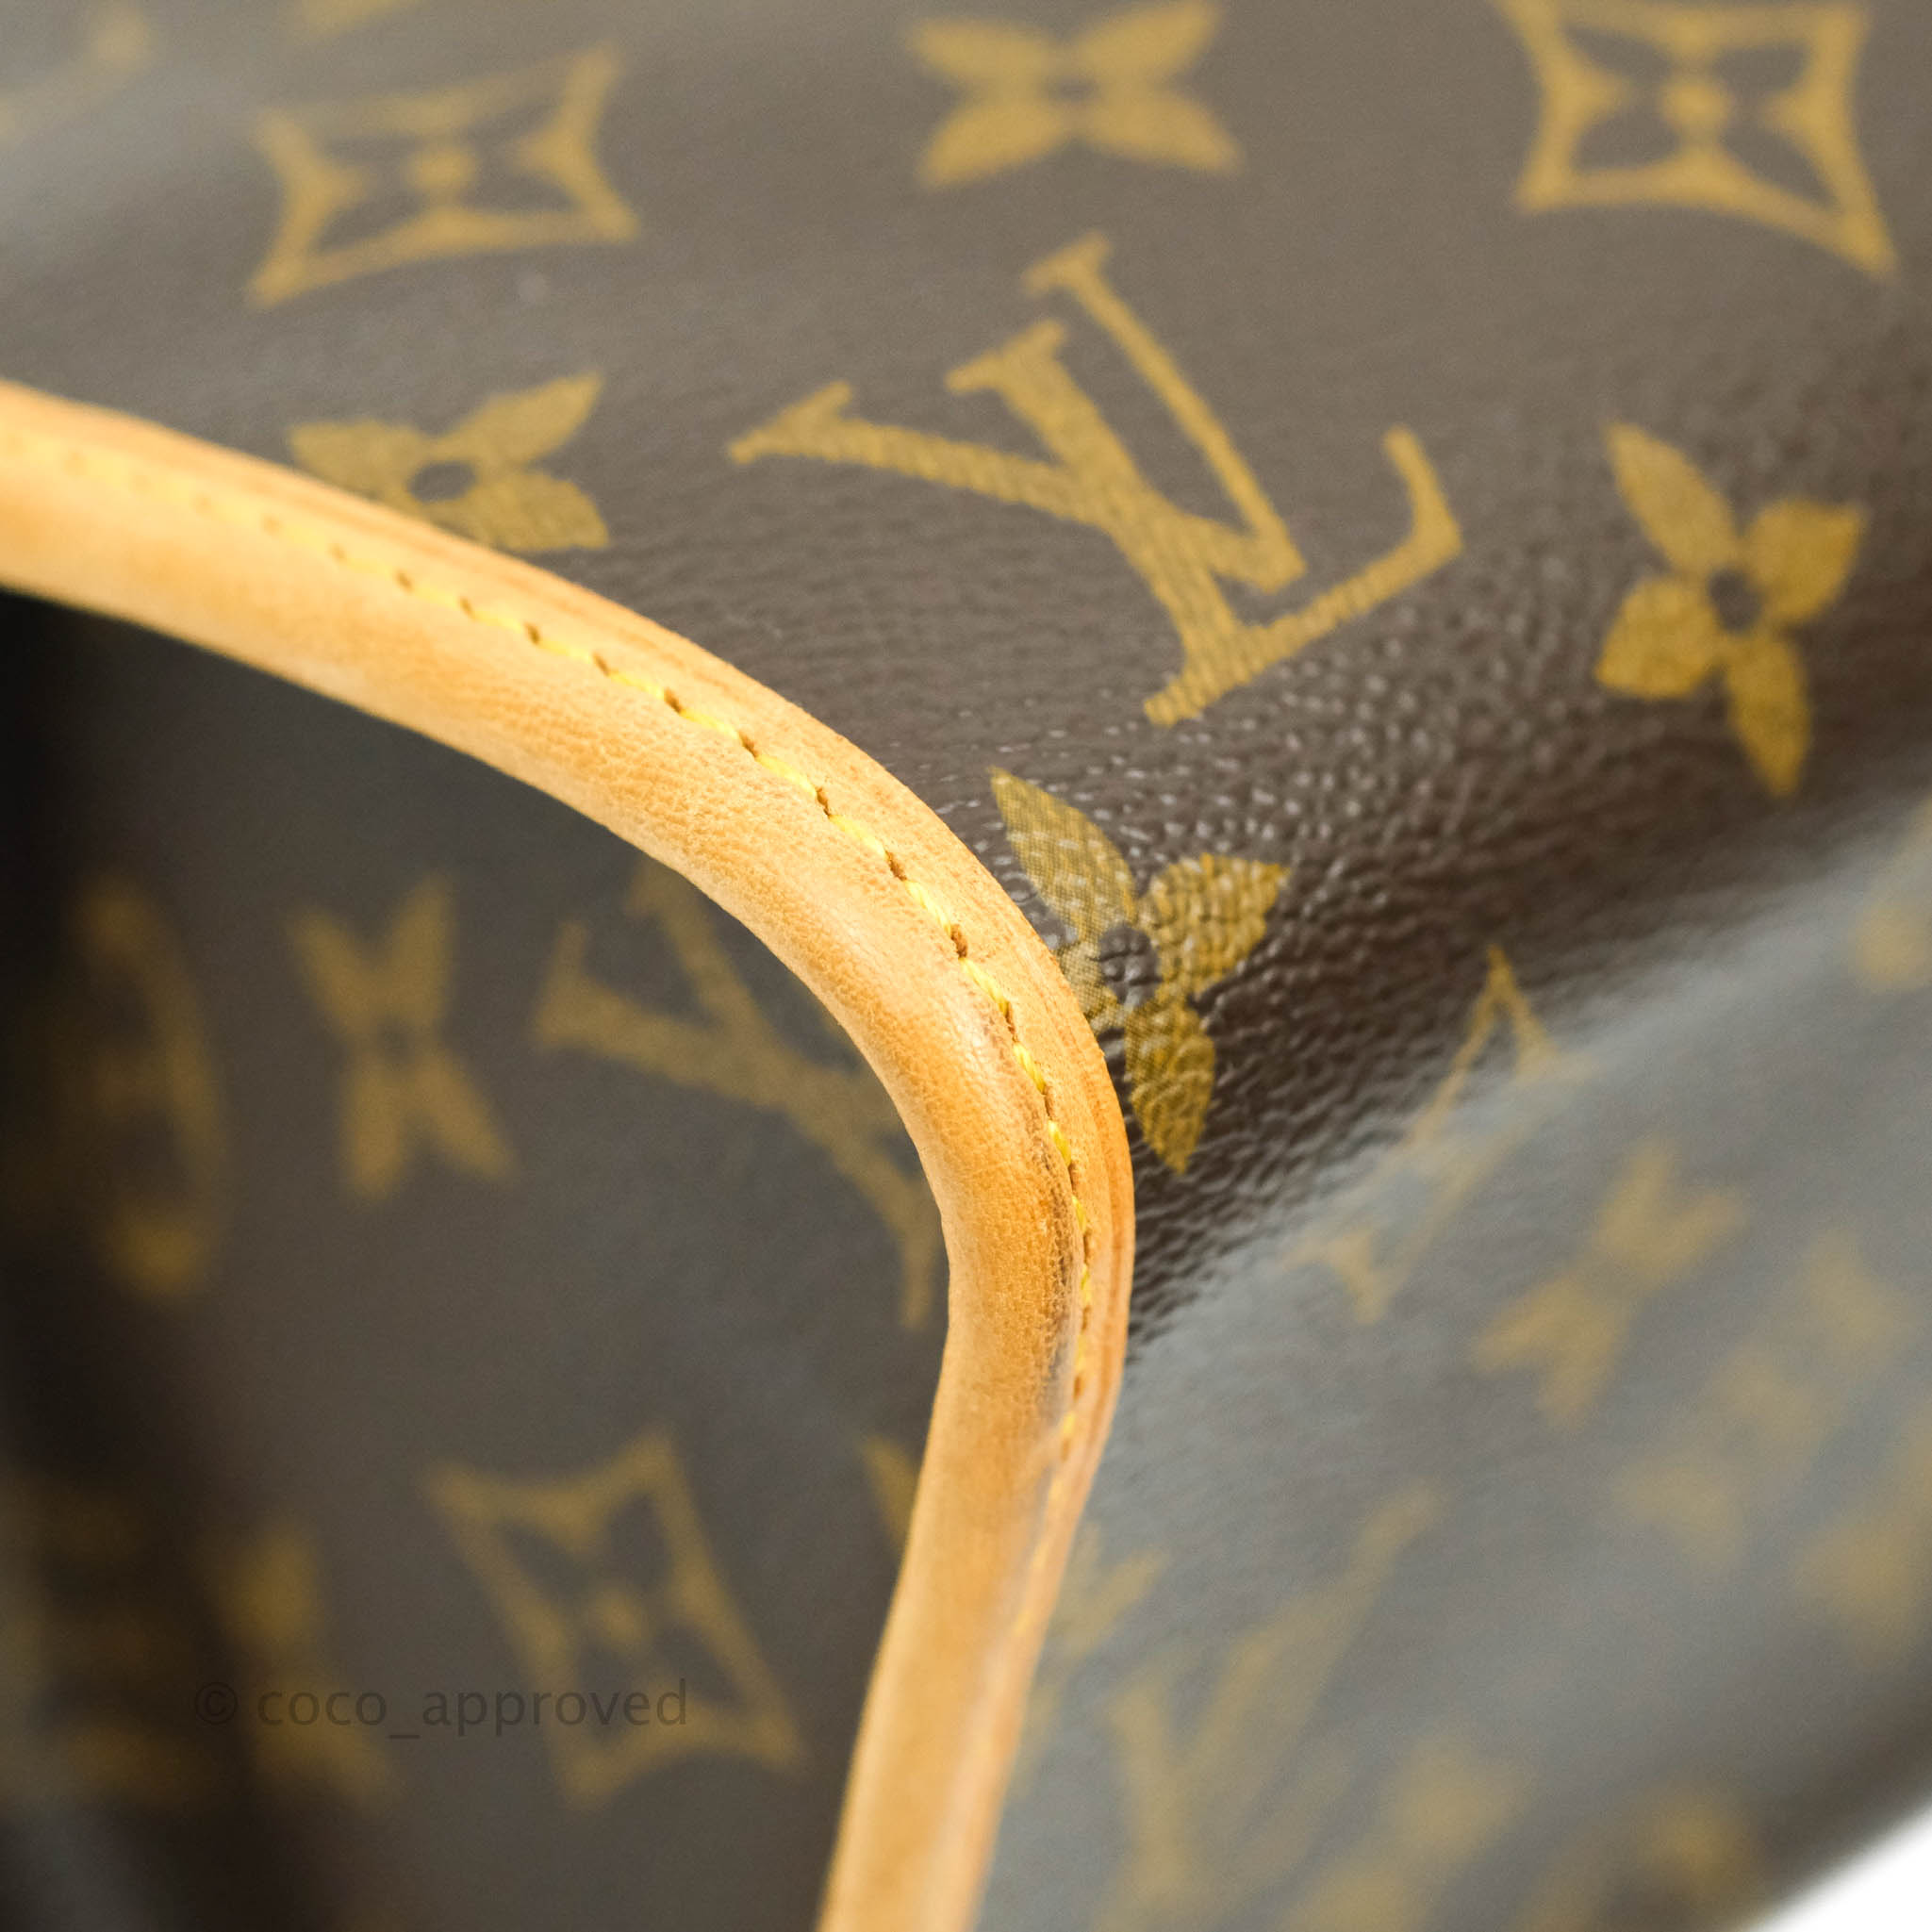 Louis Vuitton Vintage Monogram Canvas Sac Triangle Tricot Bag For